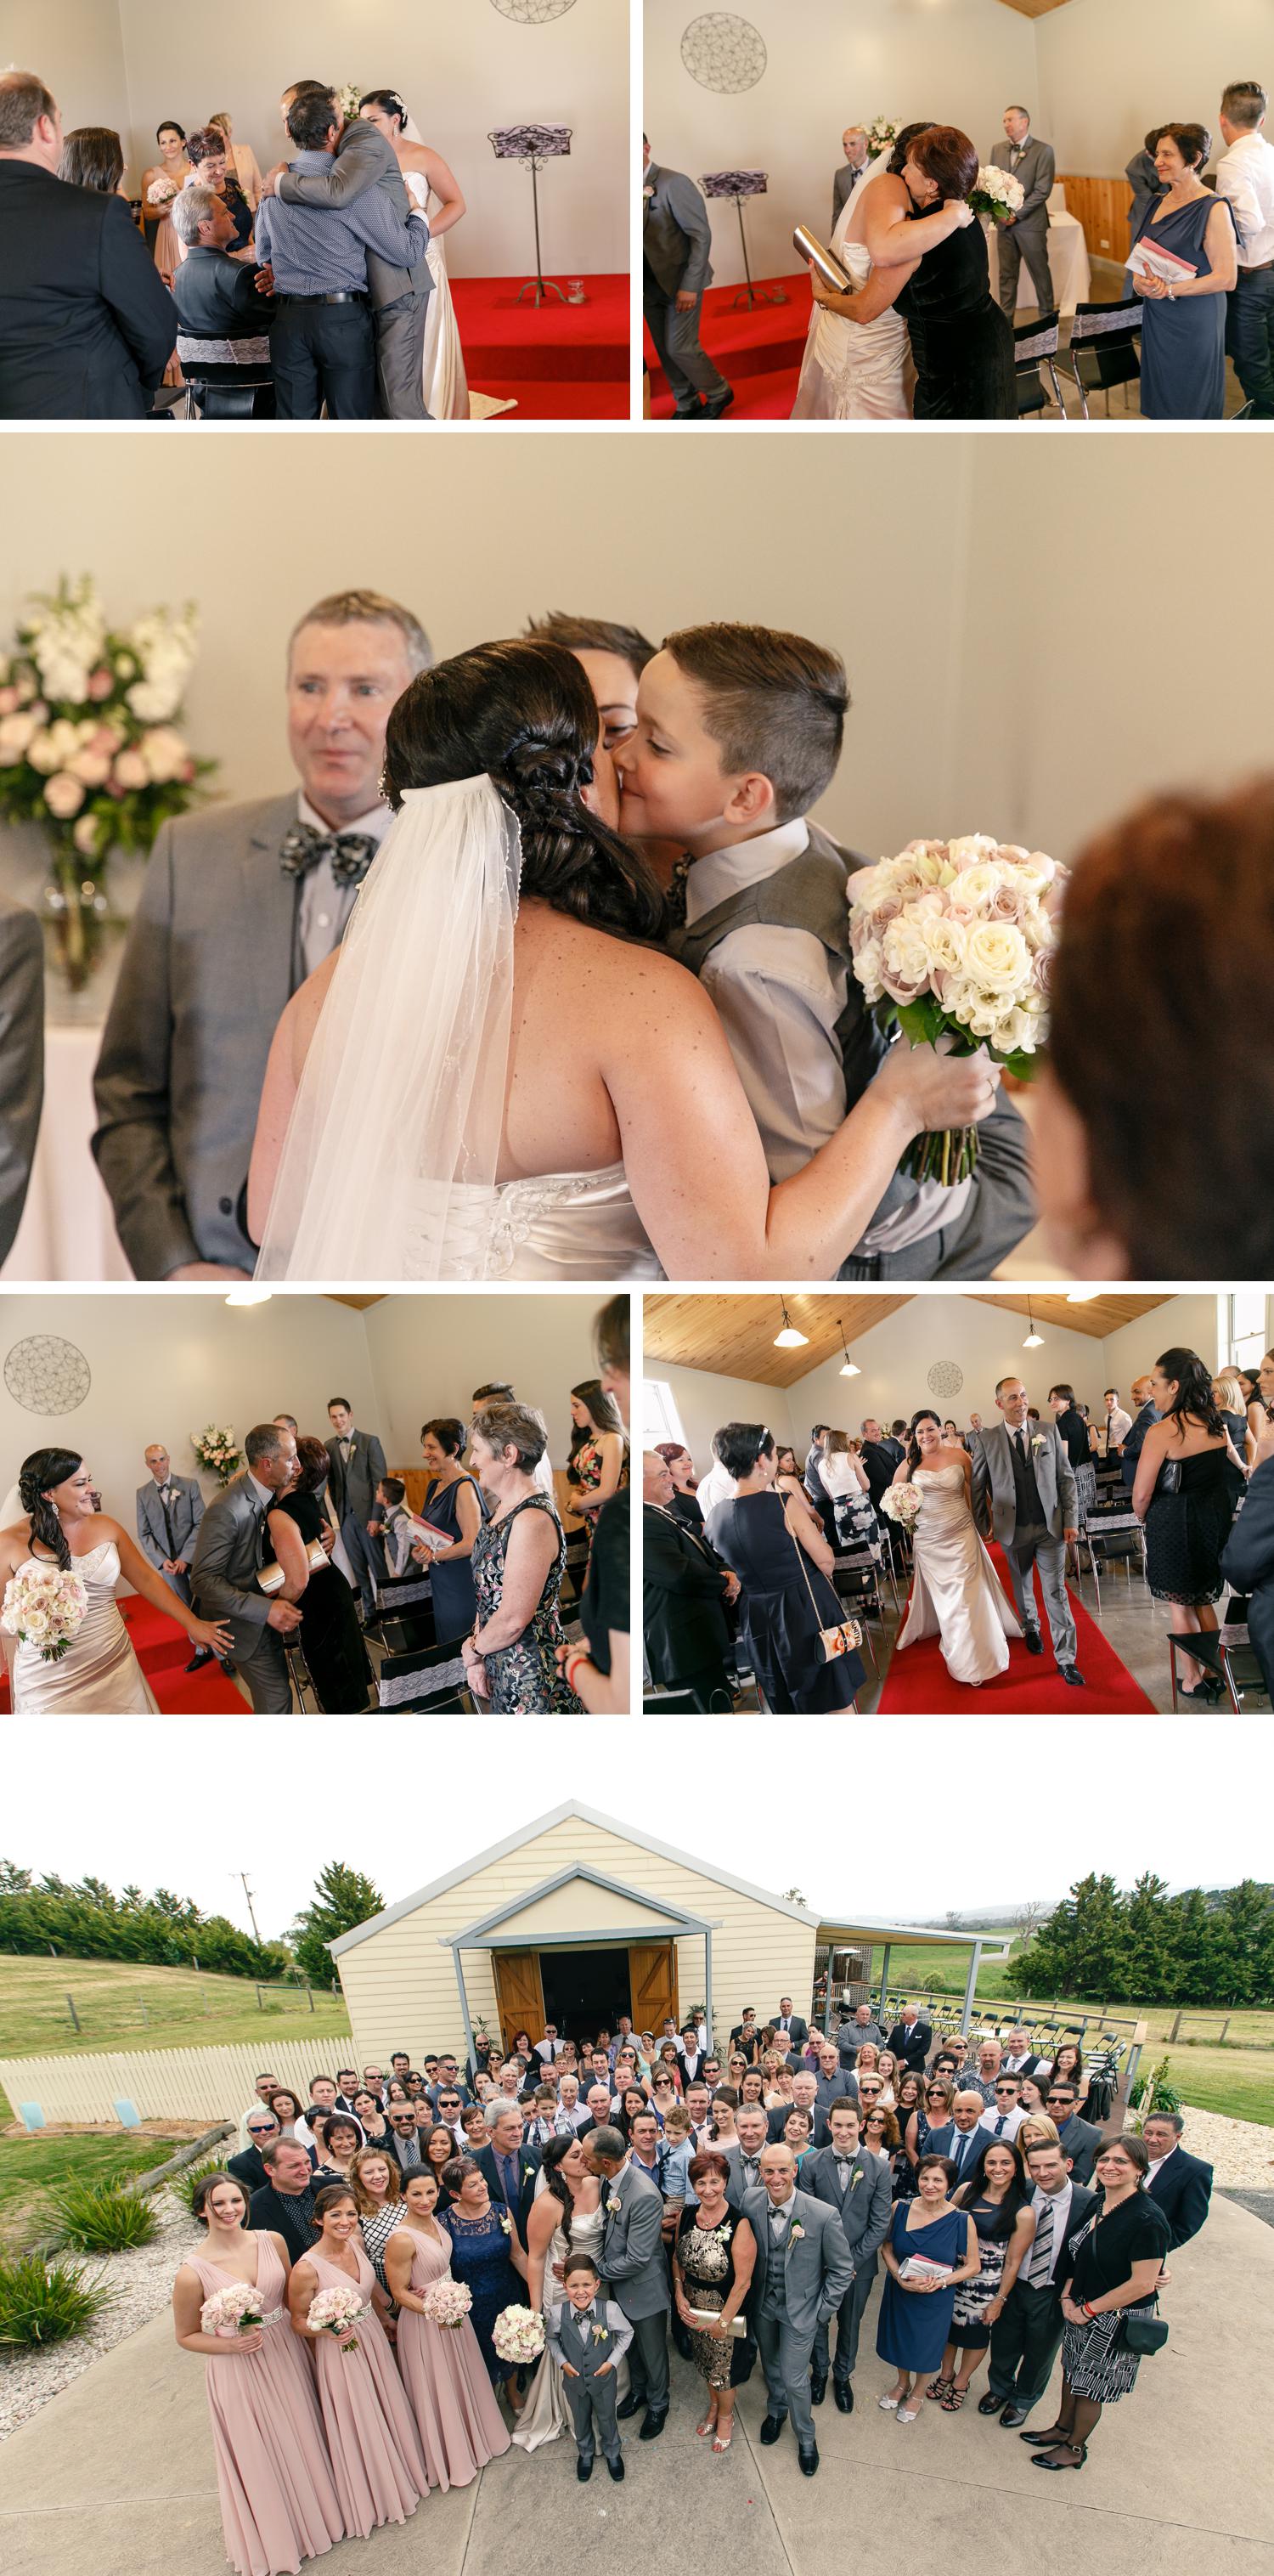 Traralgon Gippsland Wedding, Bride and Groom Embracing, Beautiful Wedding Dress Photo by Danae Studios